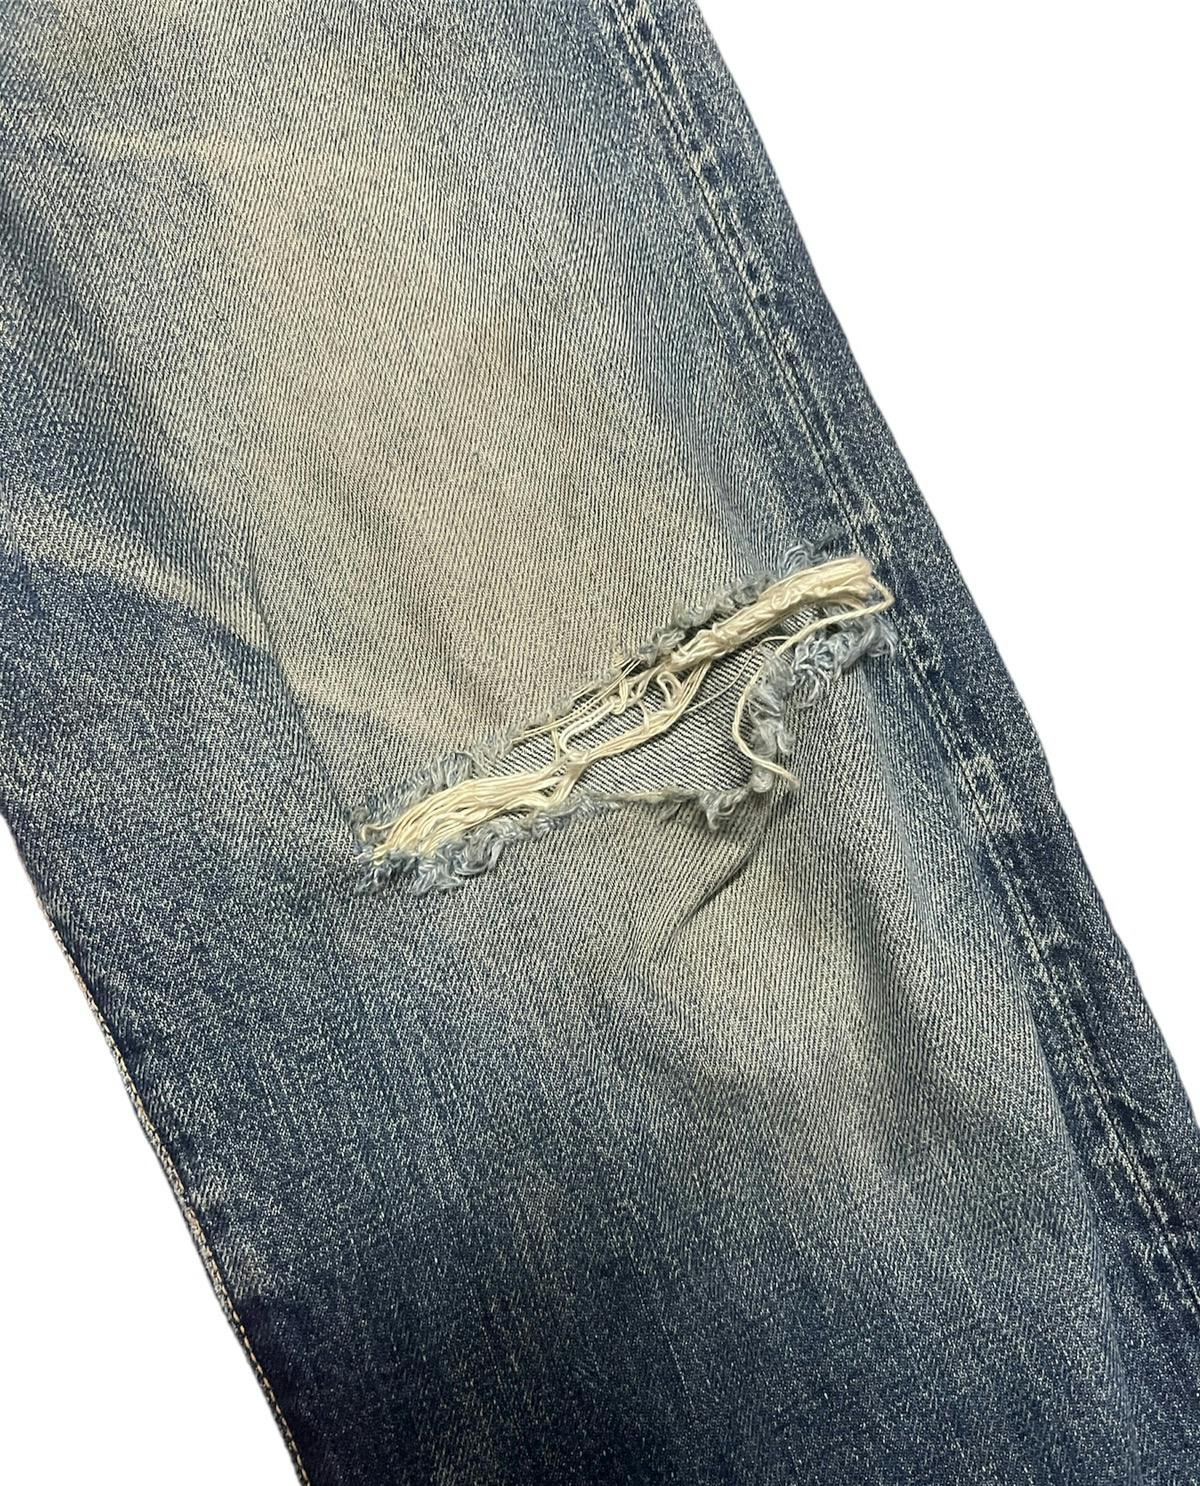 Evisu Denim distressed selvedge jeans - 7